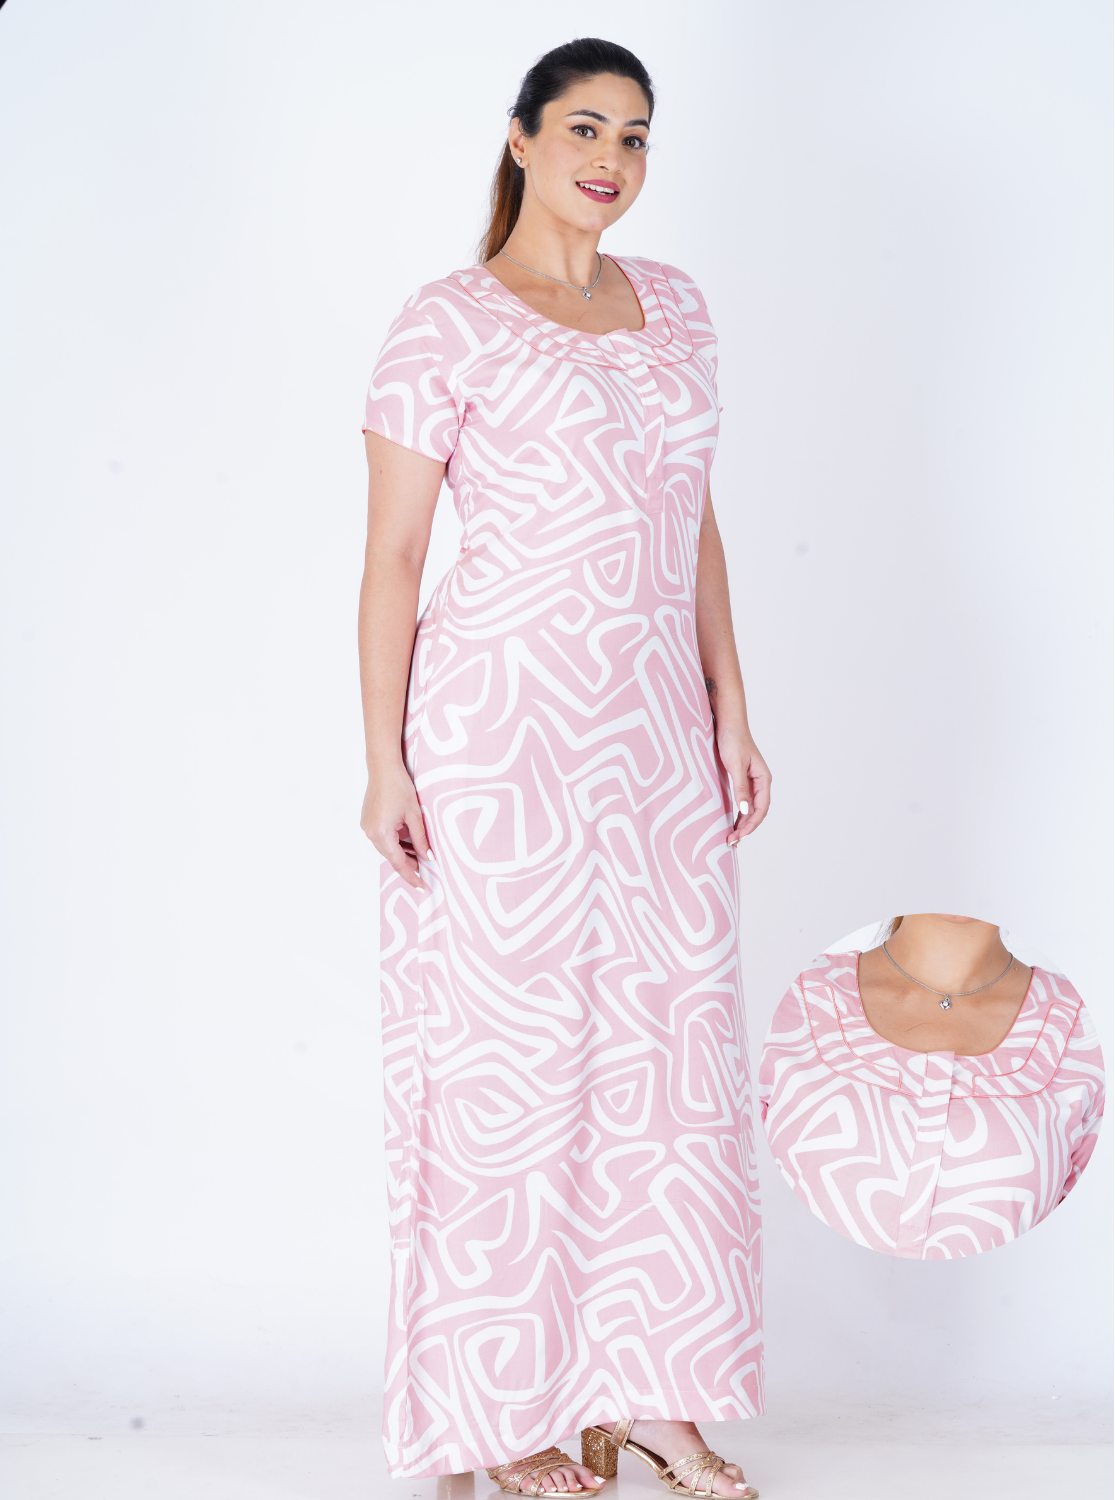 New MANGAI Premium Rayon Nighties- All Over Printed Stylish Nightwear for Stylish Women | Updated Collection's